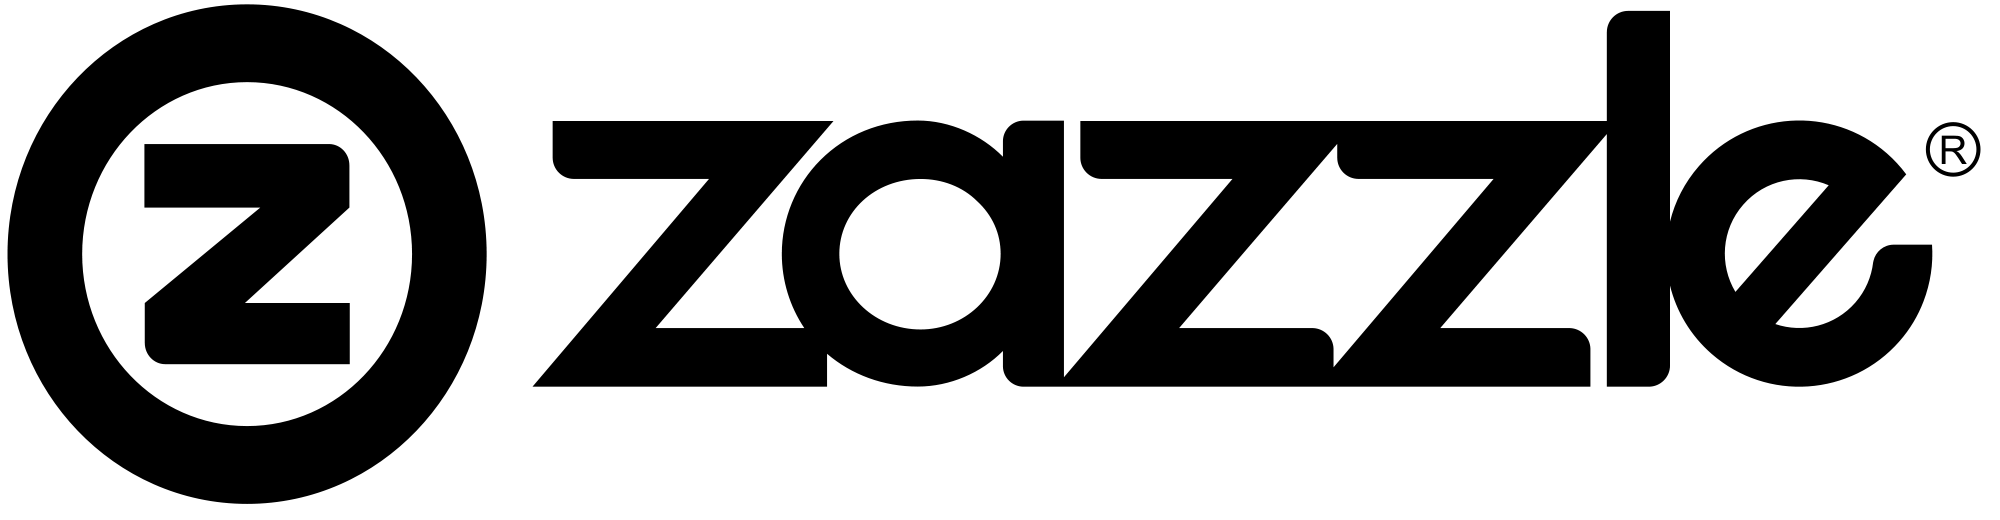 Zazzle.com Logo - Zazzle logo.svg